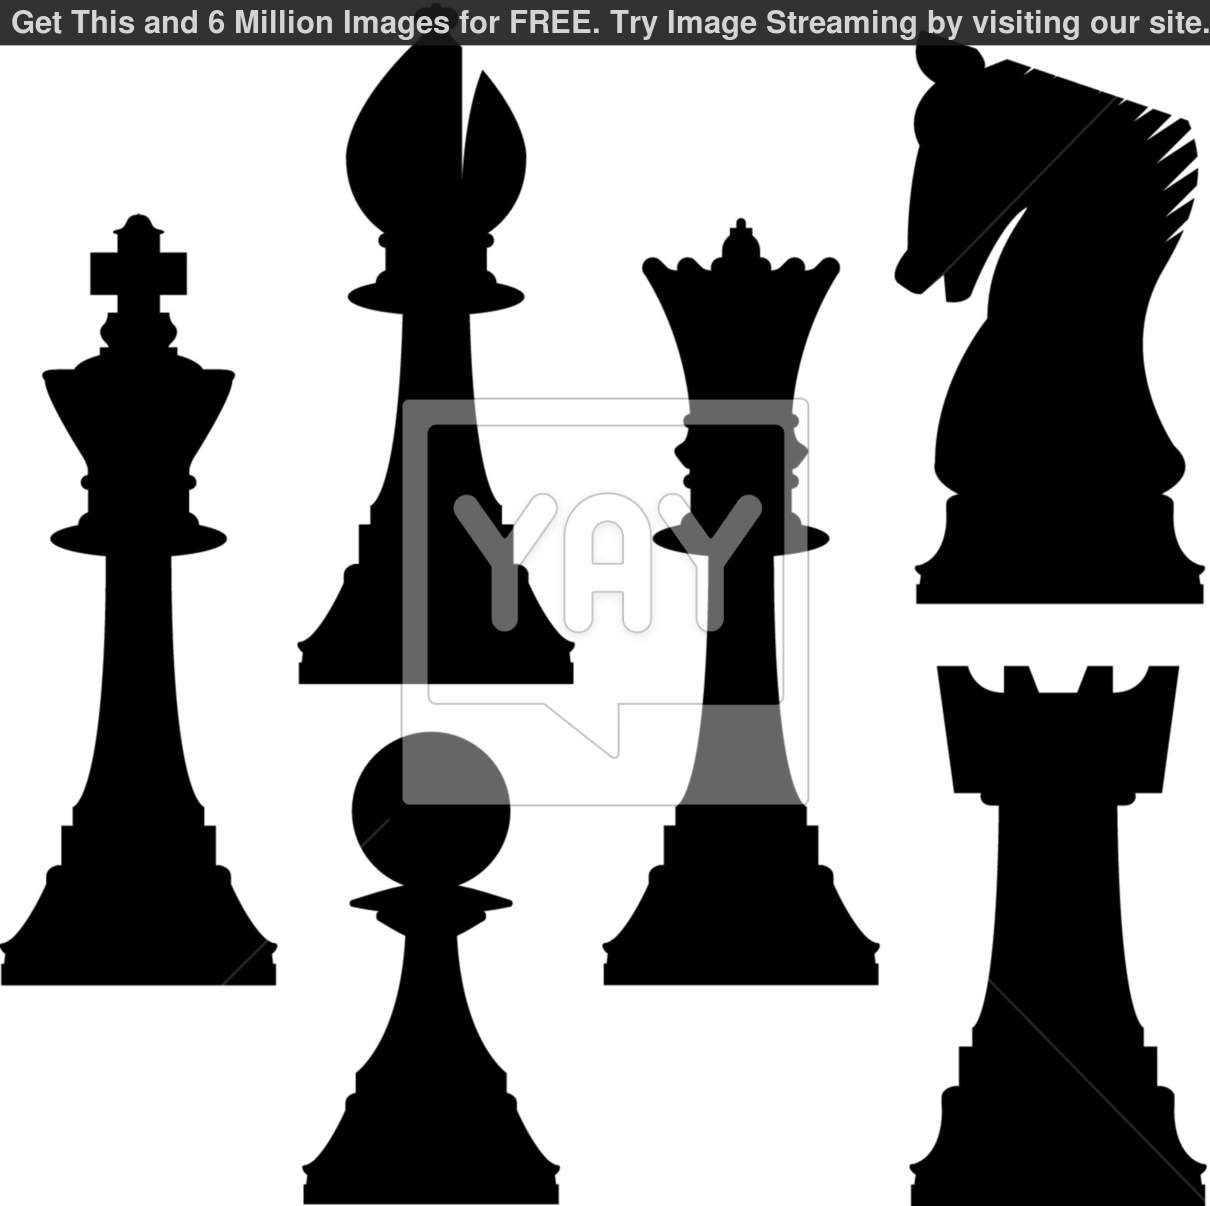 Chess Piece Silhouette